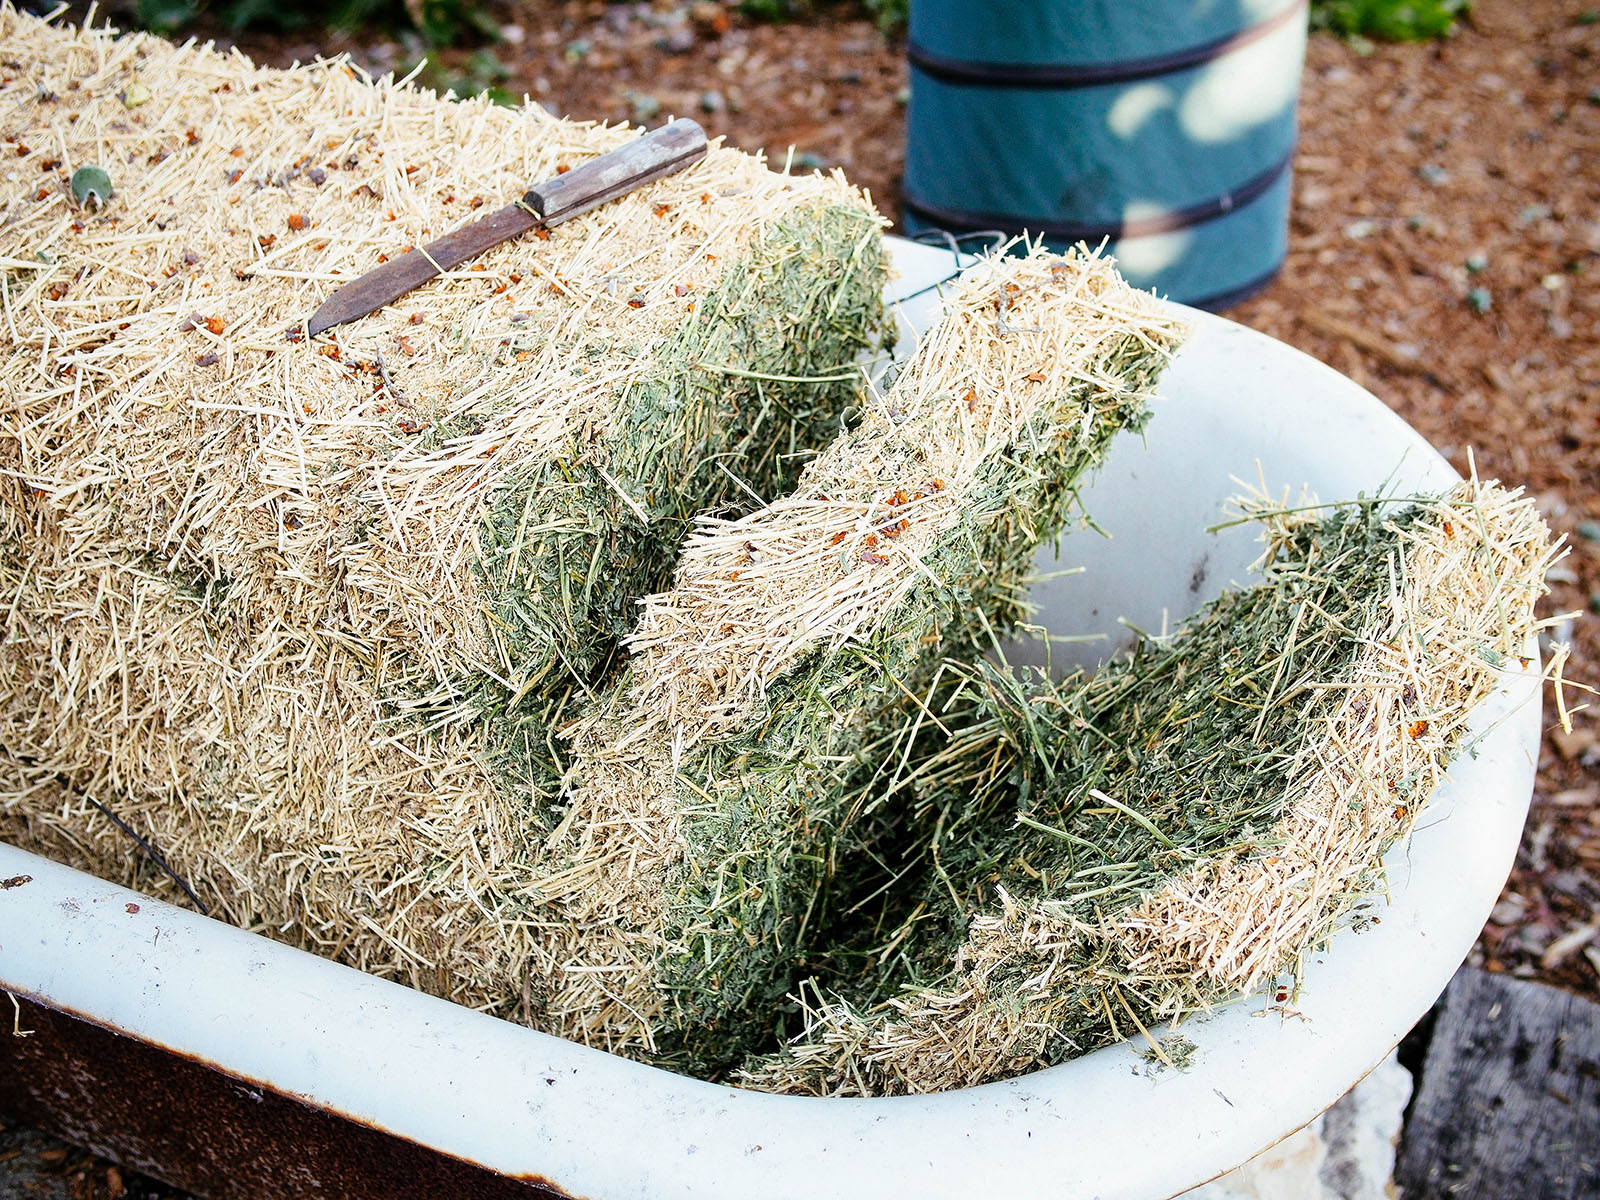 Bale of alfalfa (lucerne hay)